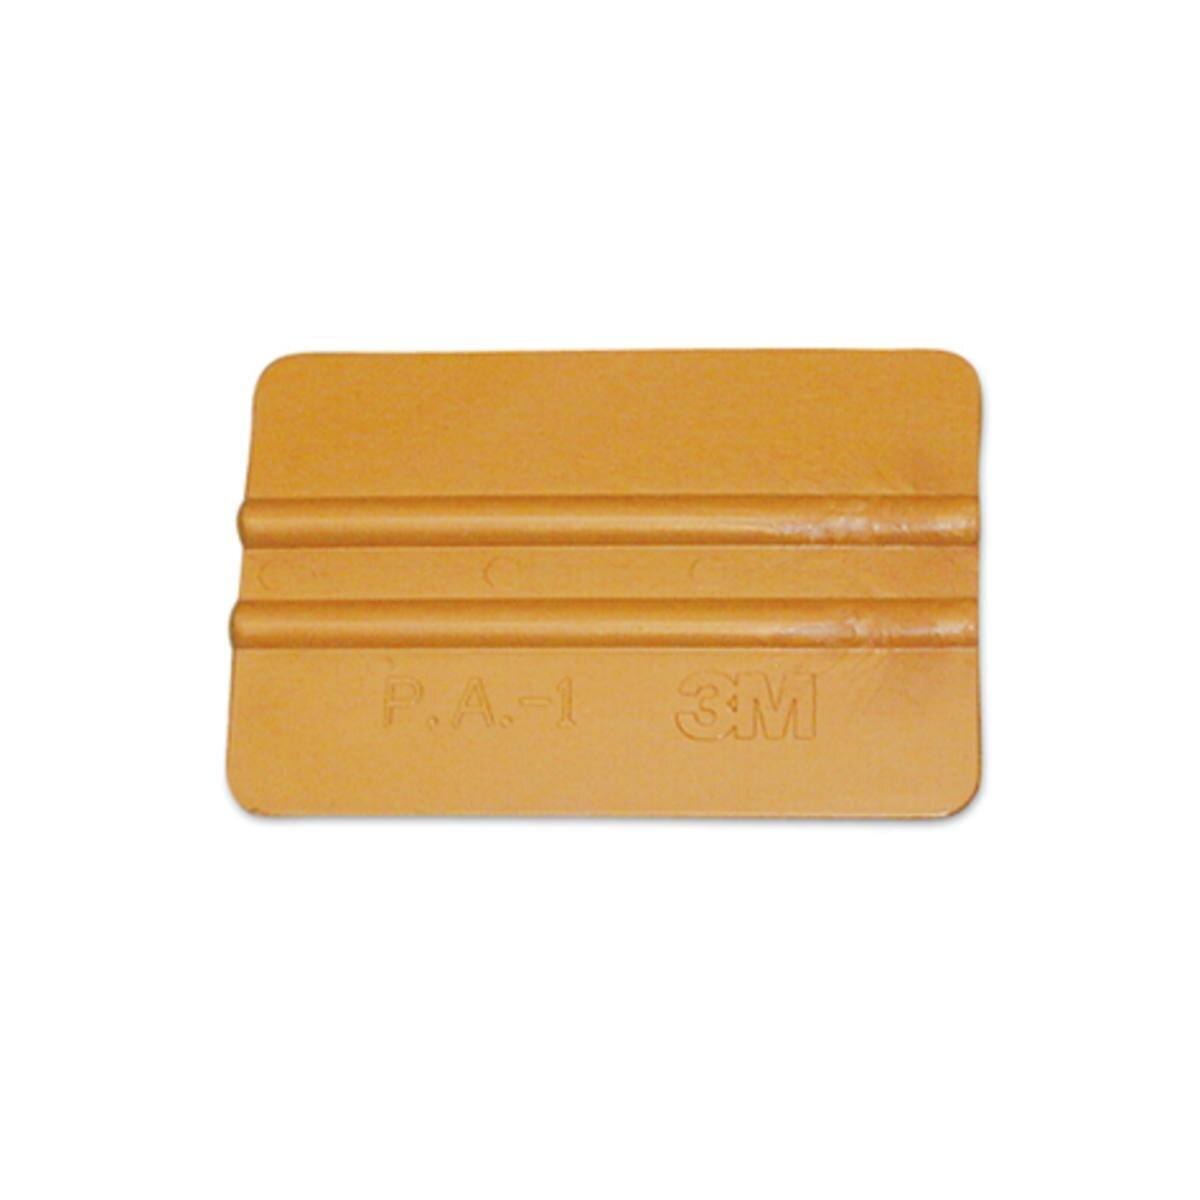 3M plastic squeegee, gold (medium hardness) 100mmx70mm